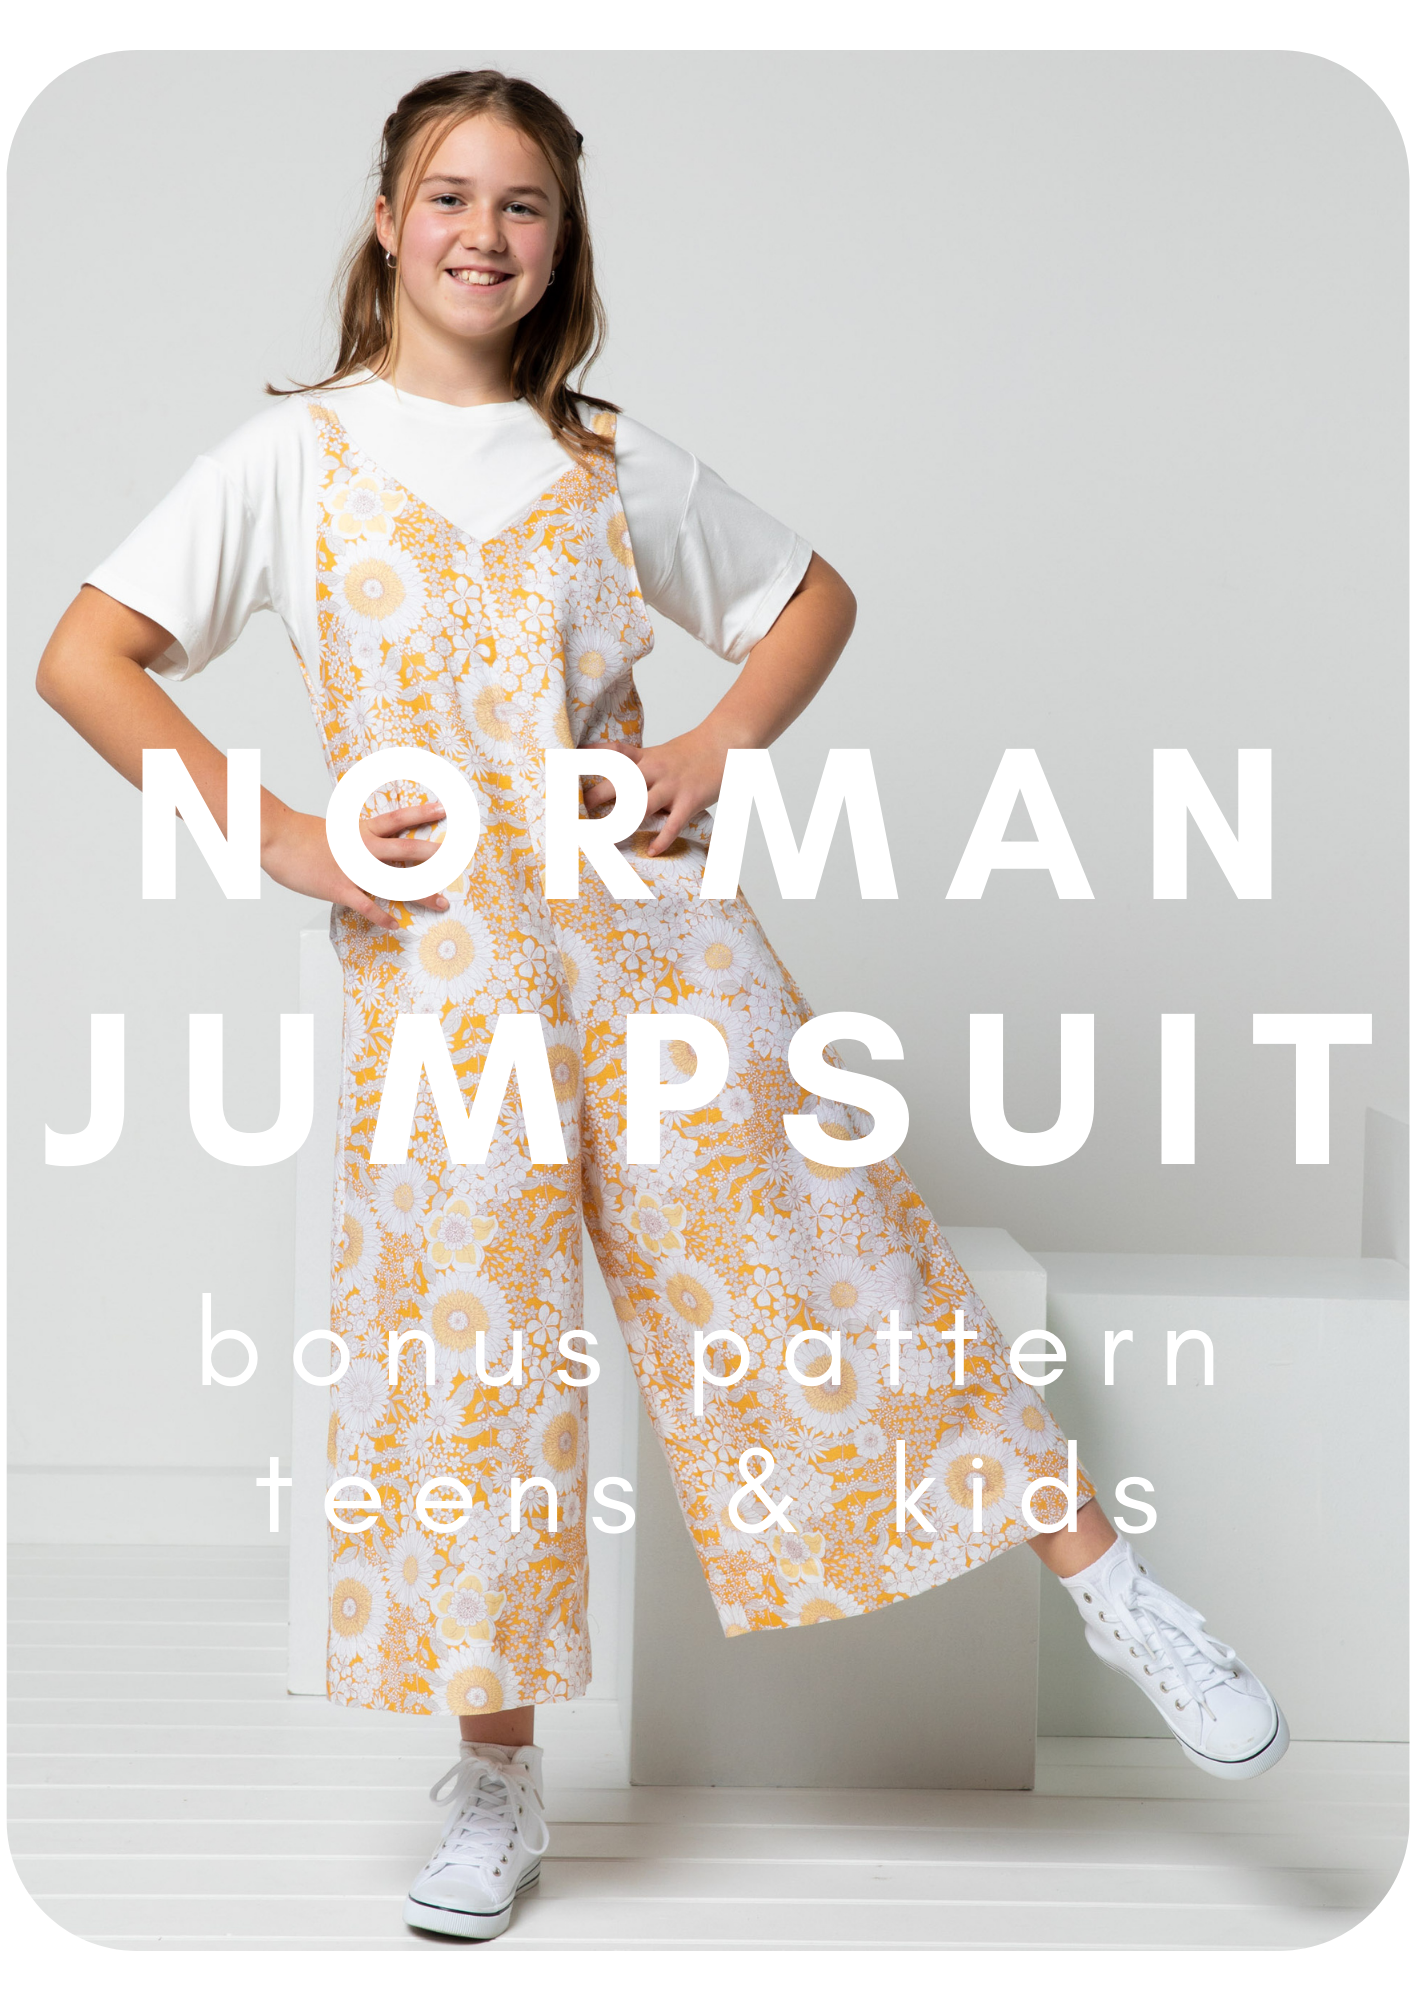 Norman Teens & Kids Bonus pattern when shopping at stylearc.com